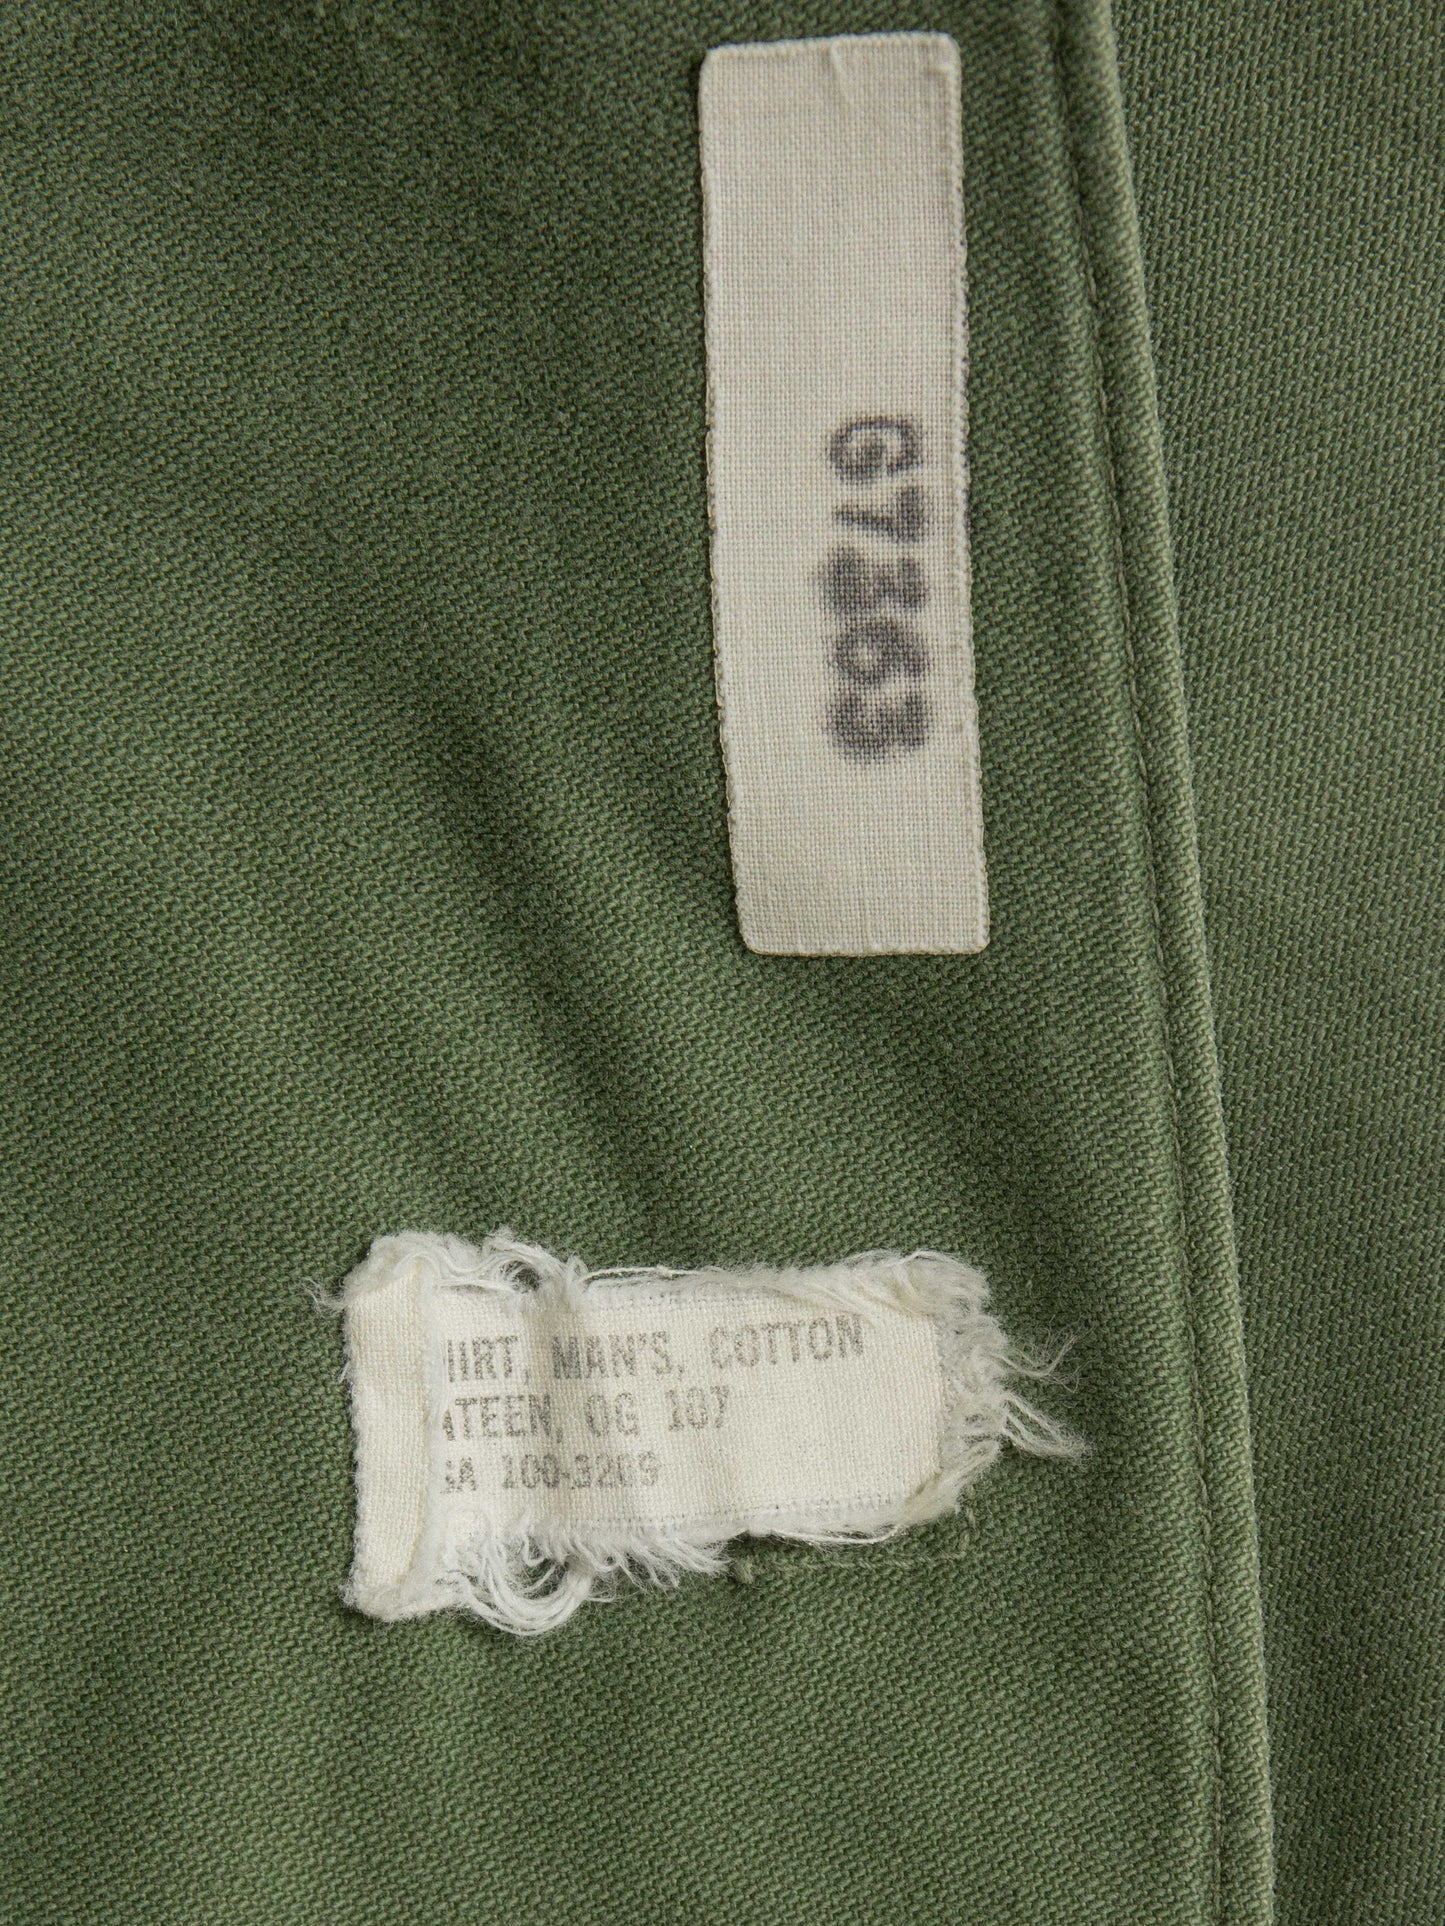 Vtg 60s US Army OG-107 Fatigue Shirt (S)